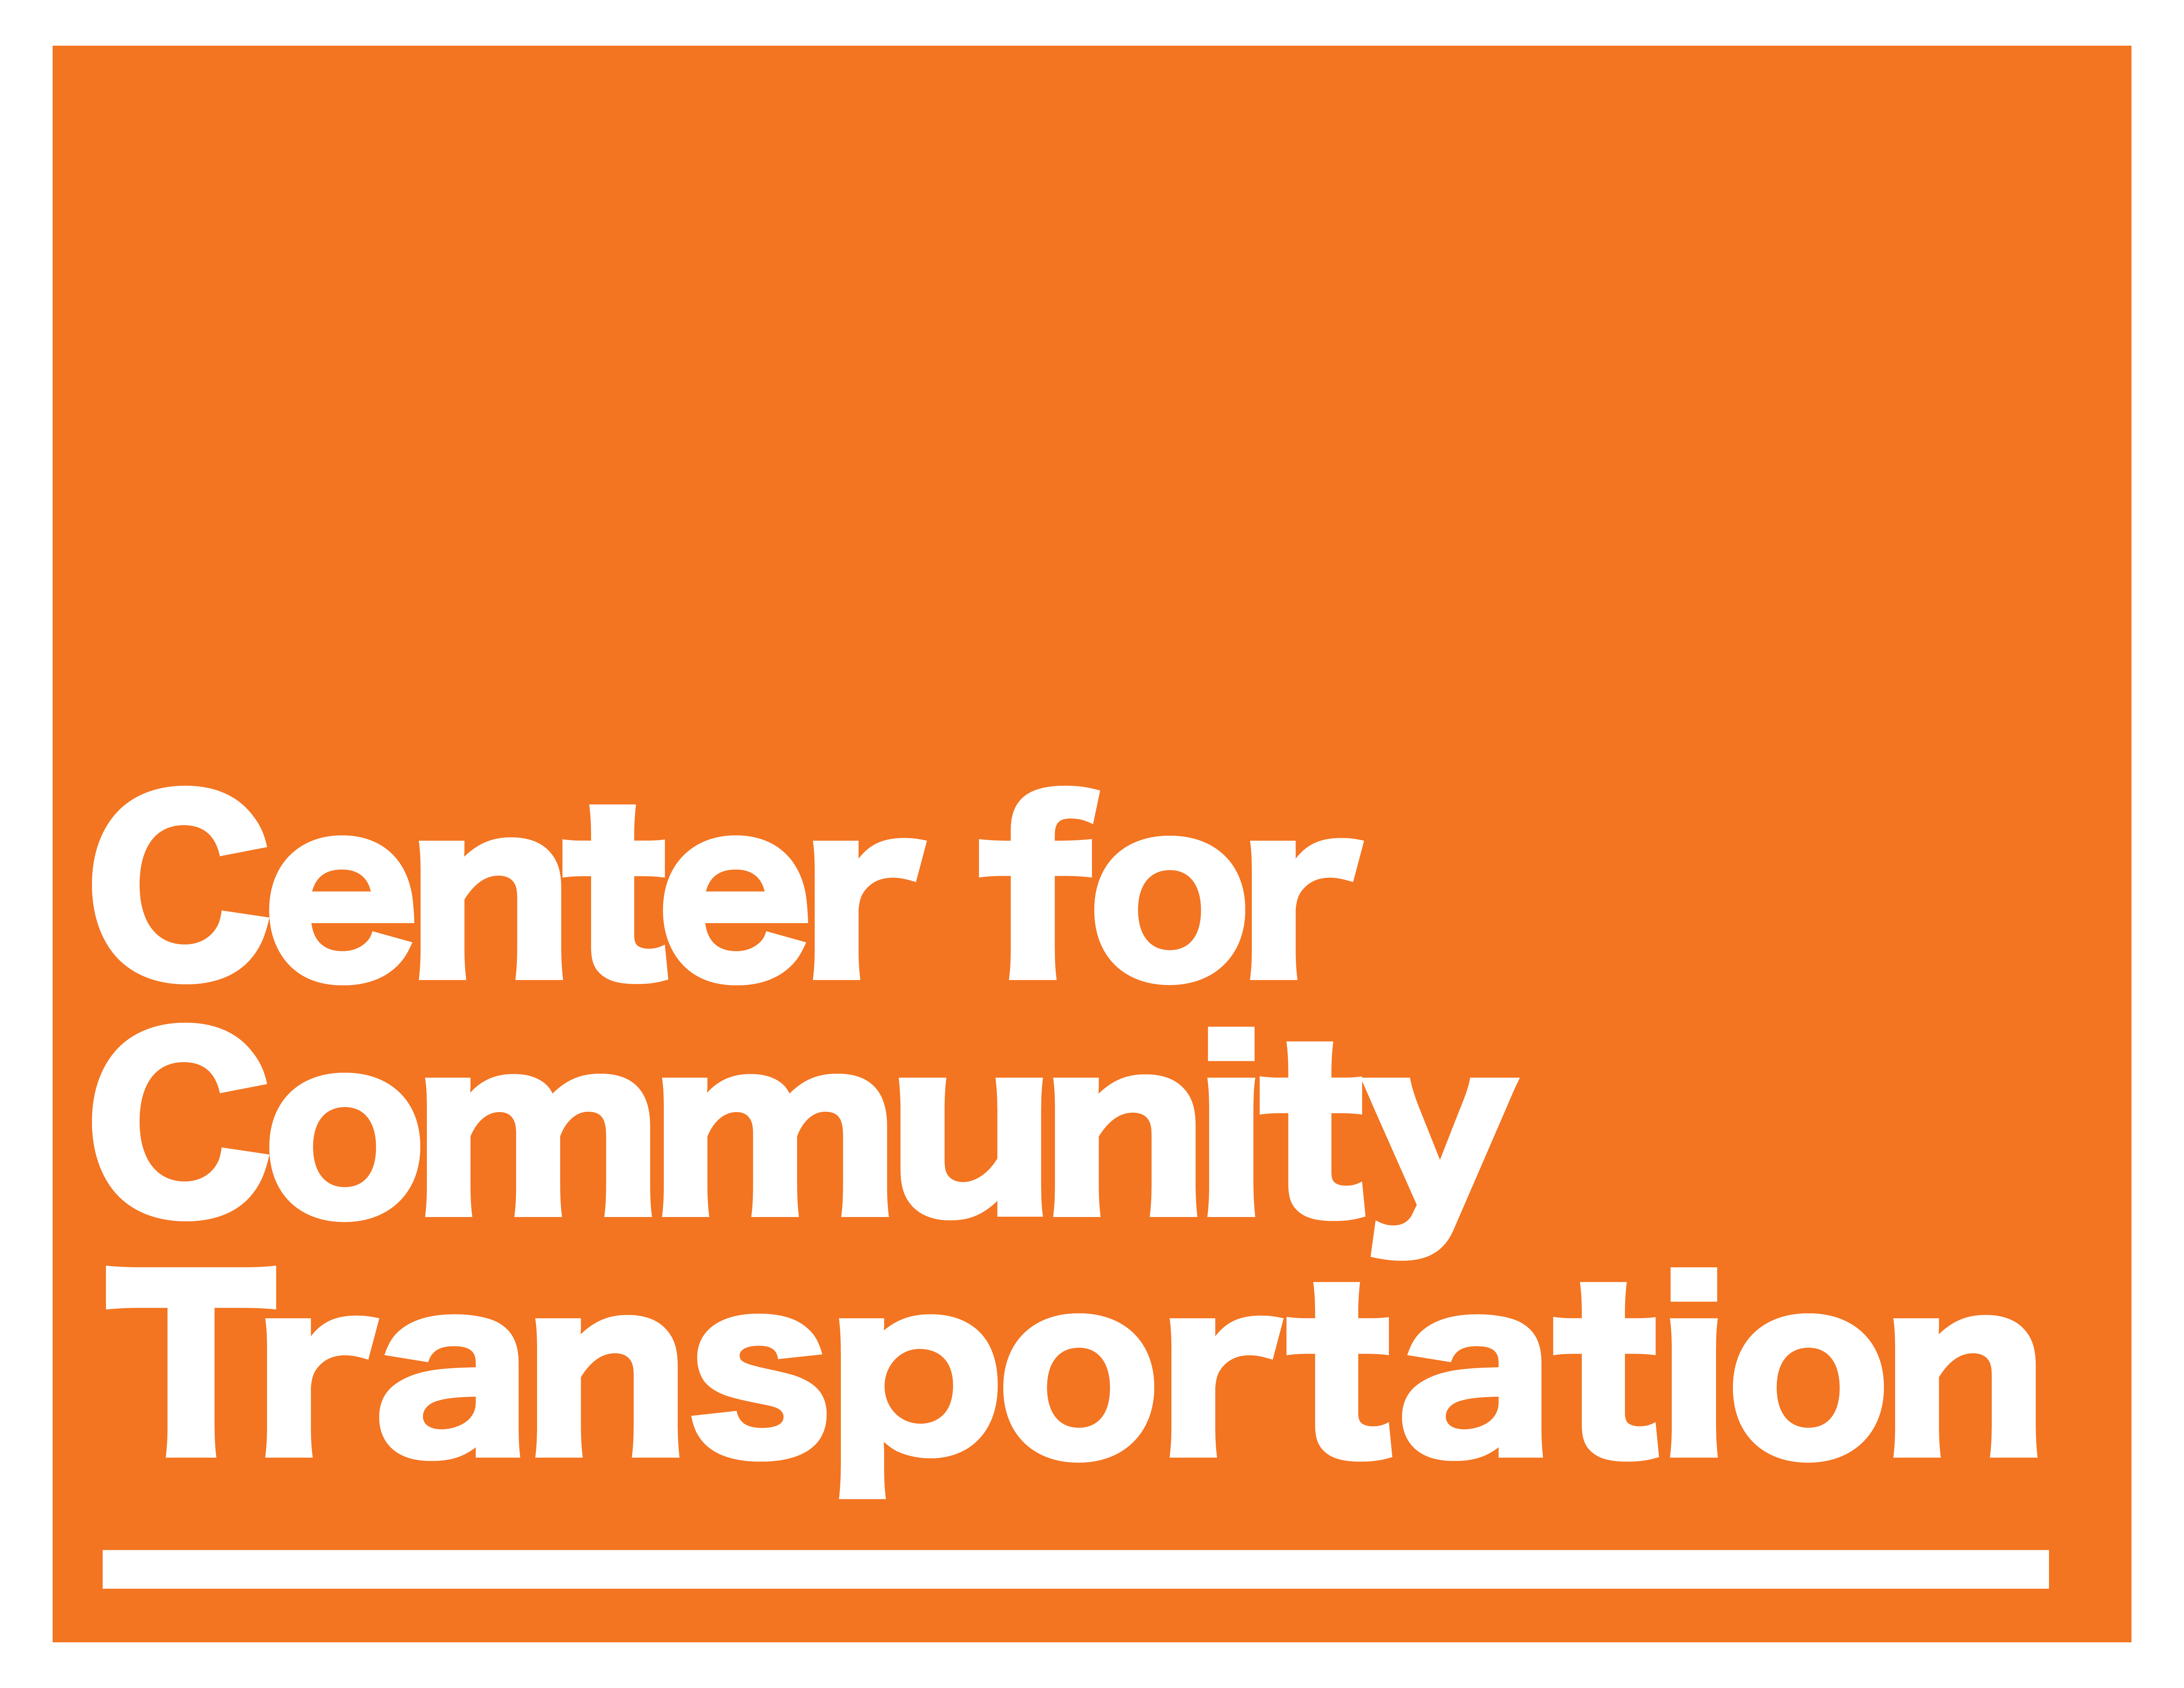 The Center For Community Transportation logo